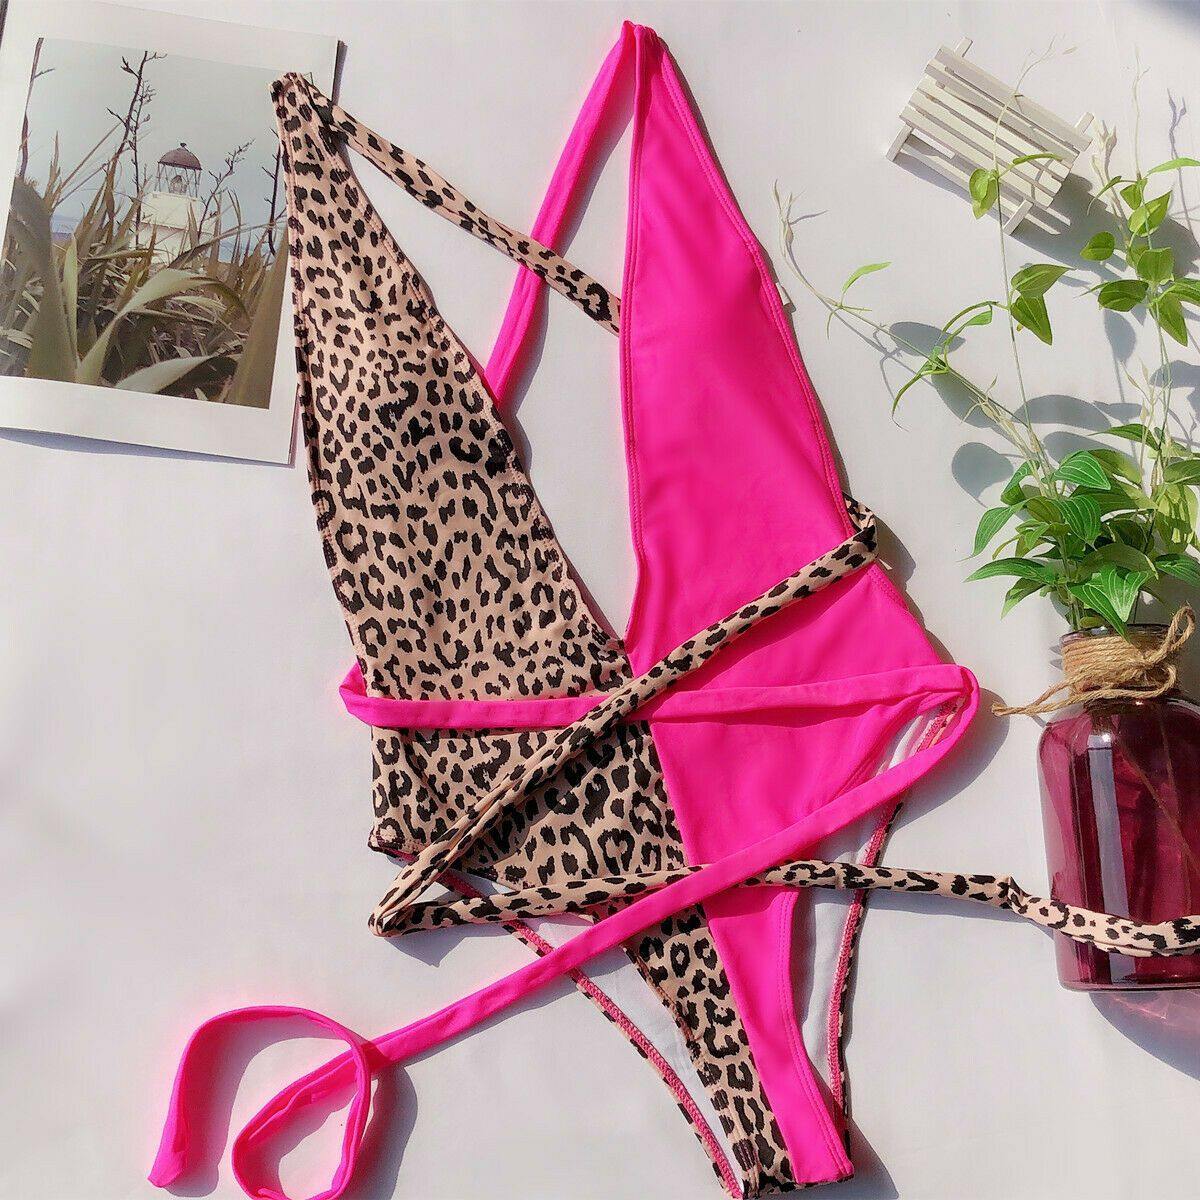 Leopard Bangdage One Piece Swimsuit-Women Swimwear-Hot pink-L-Free Shipping Leatheretro